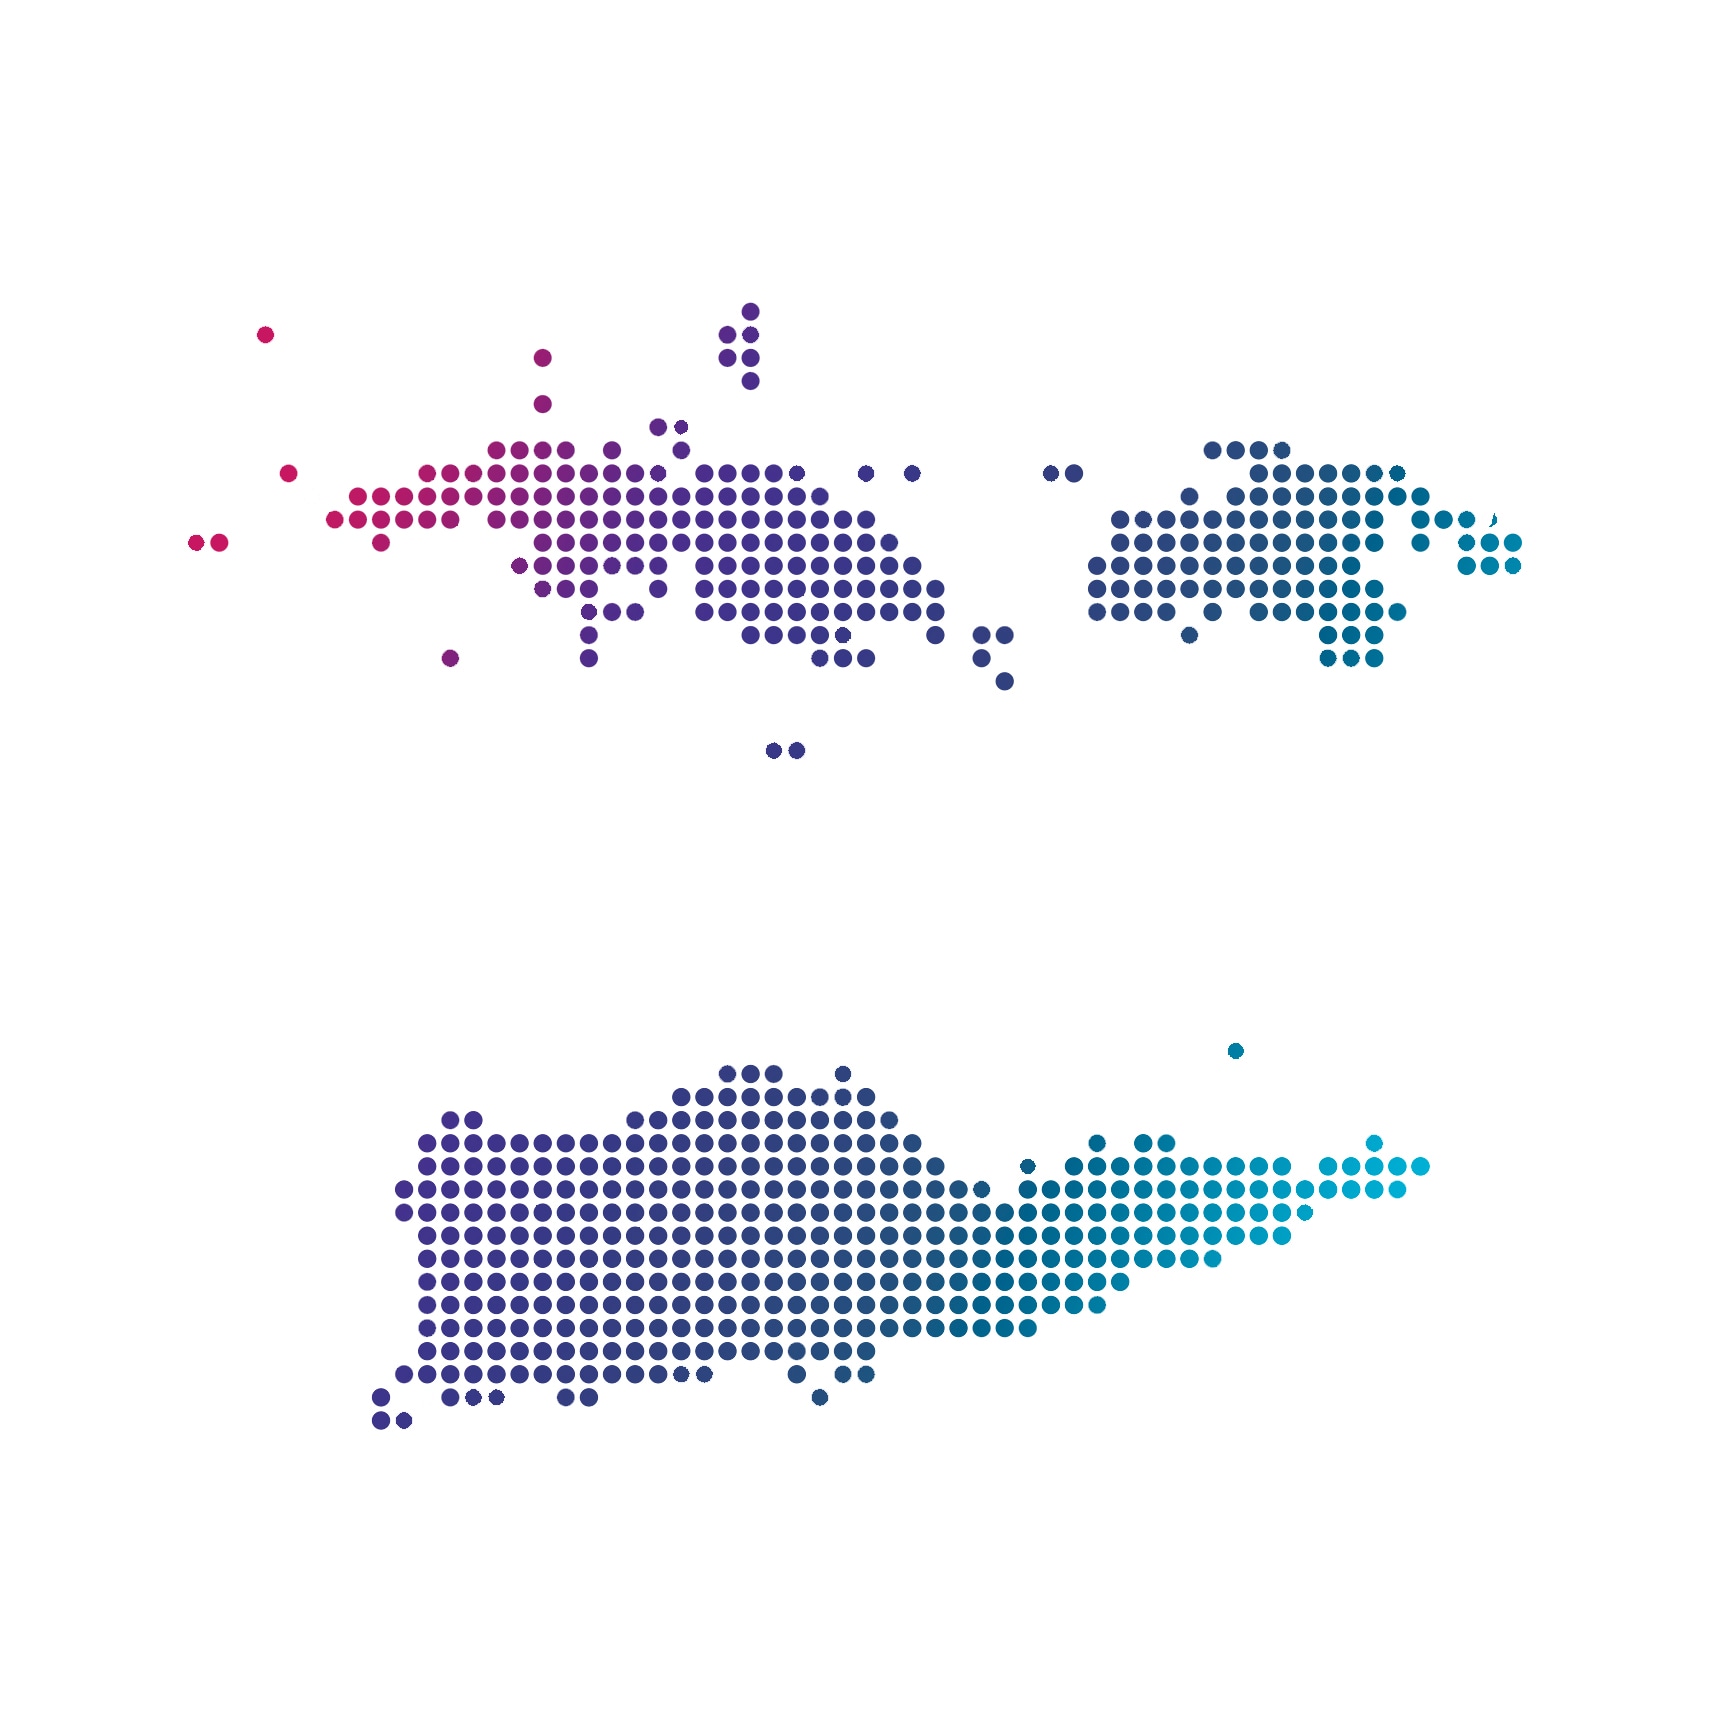 Decorative: Shape of Virgin Islands made of dots